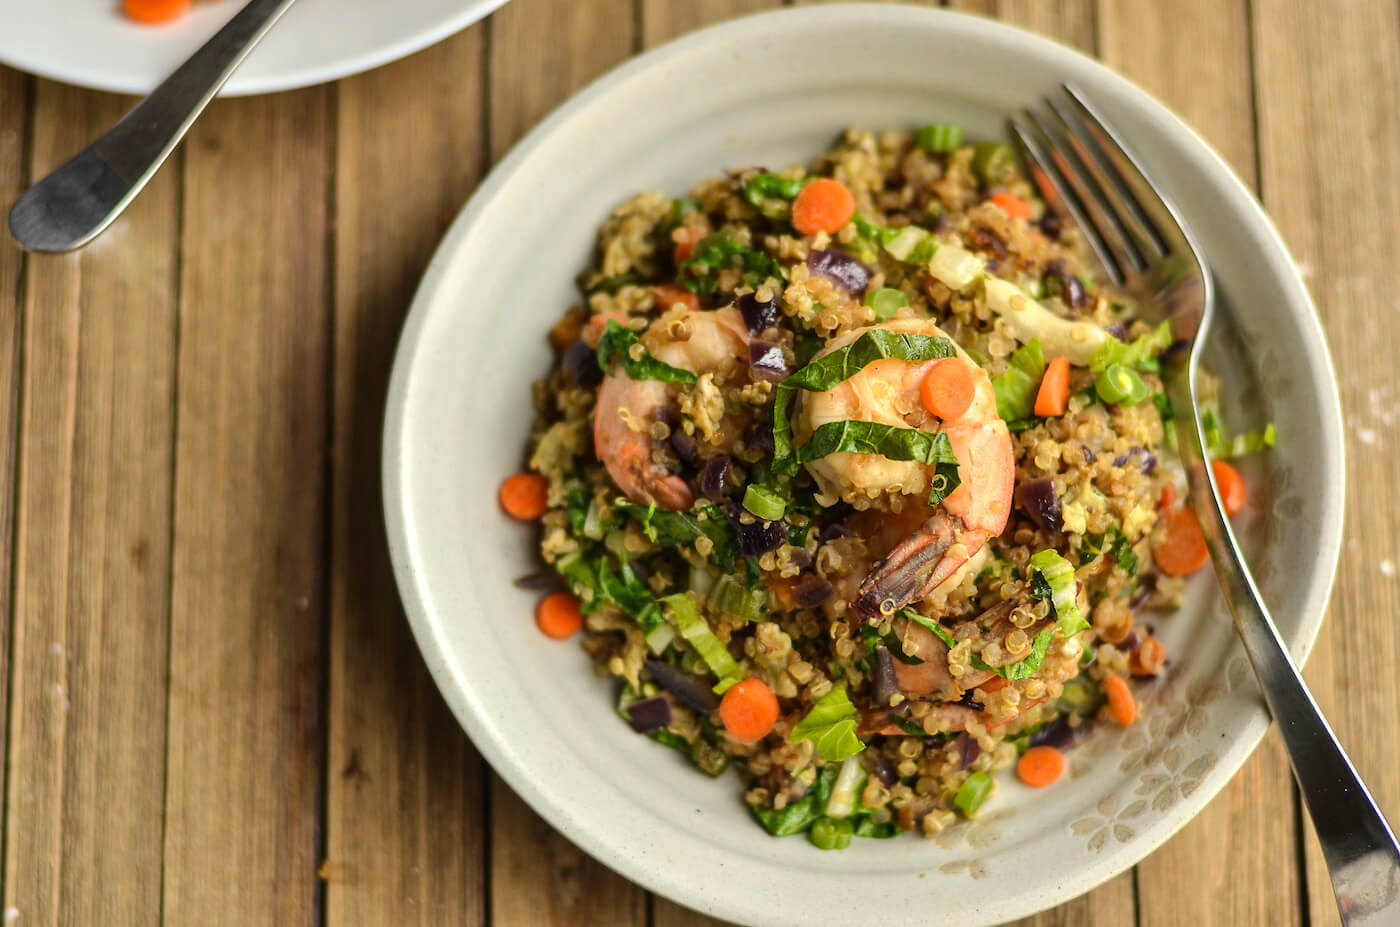 Cooked shrimp and quinoa with veggies